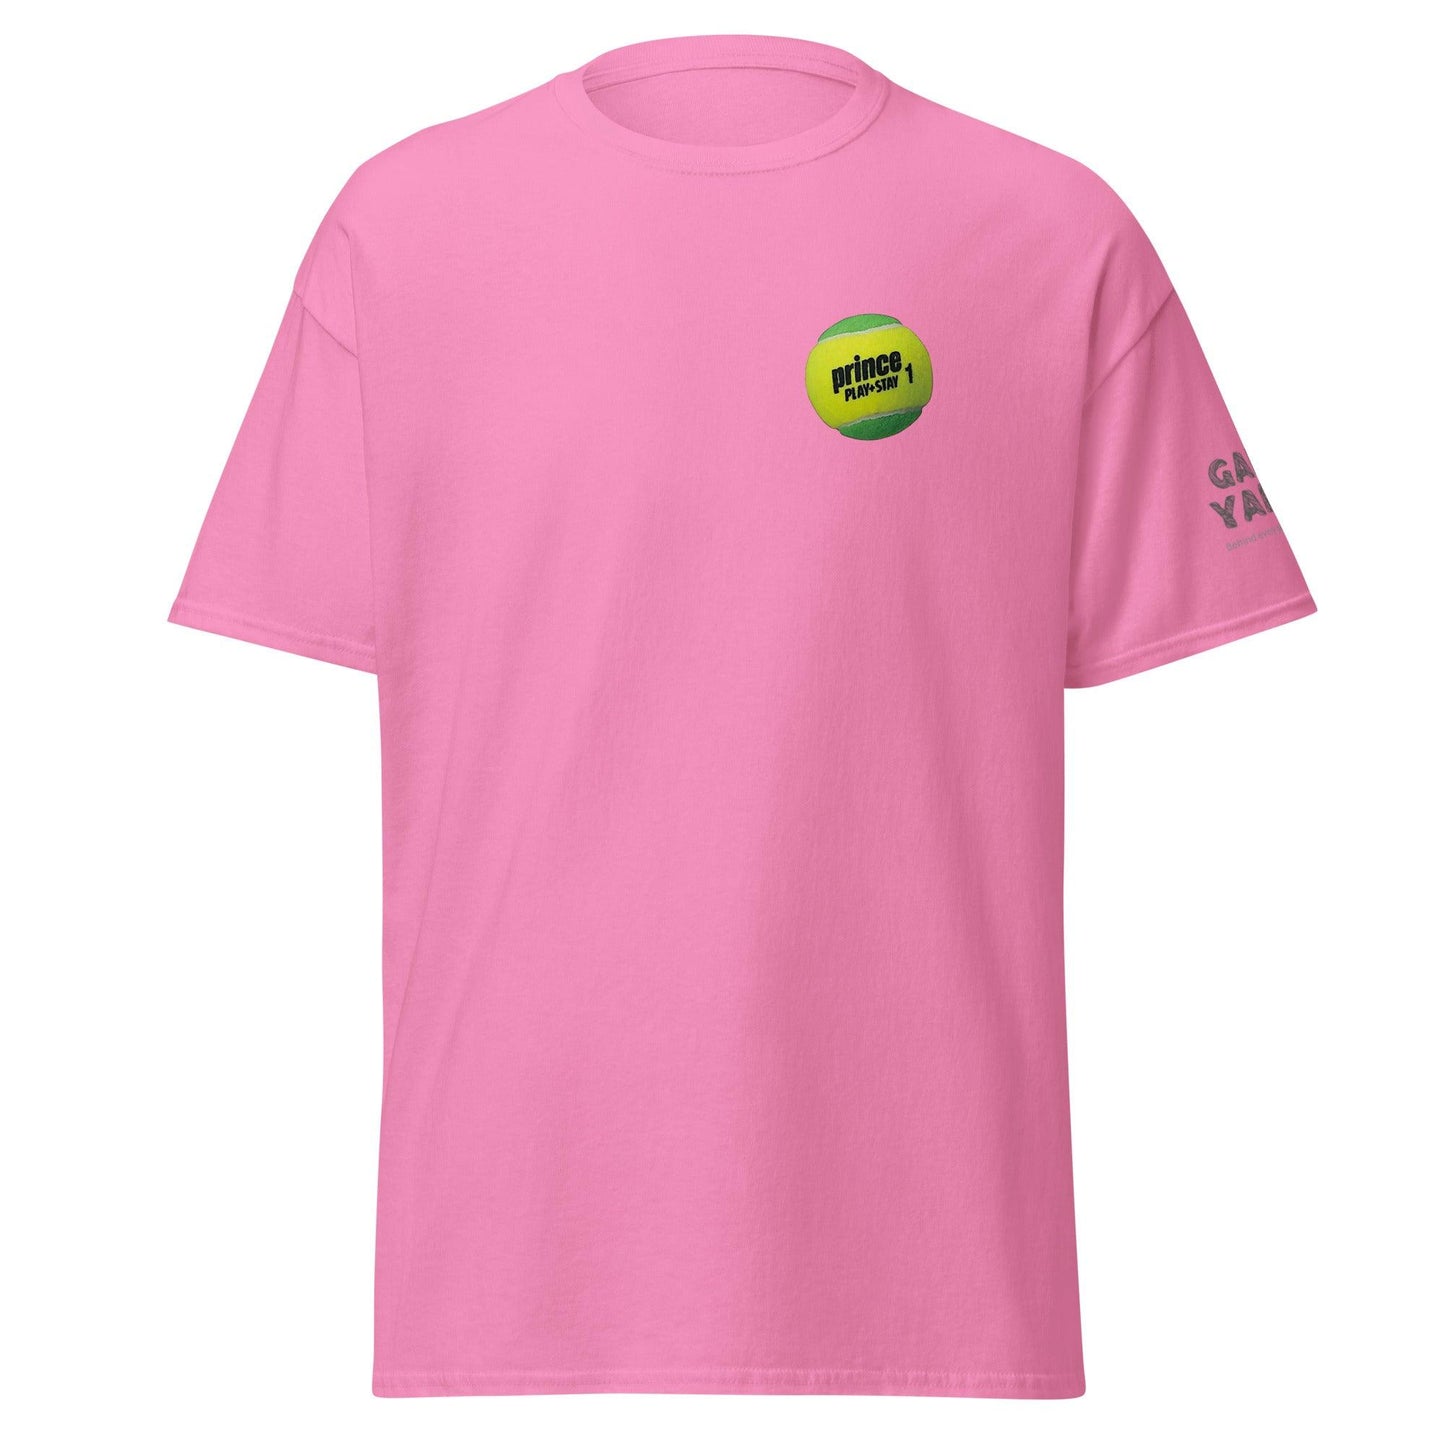 Prince Tennis Ball T-shirt by Game Yarns